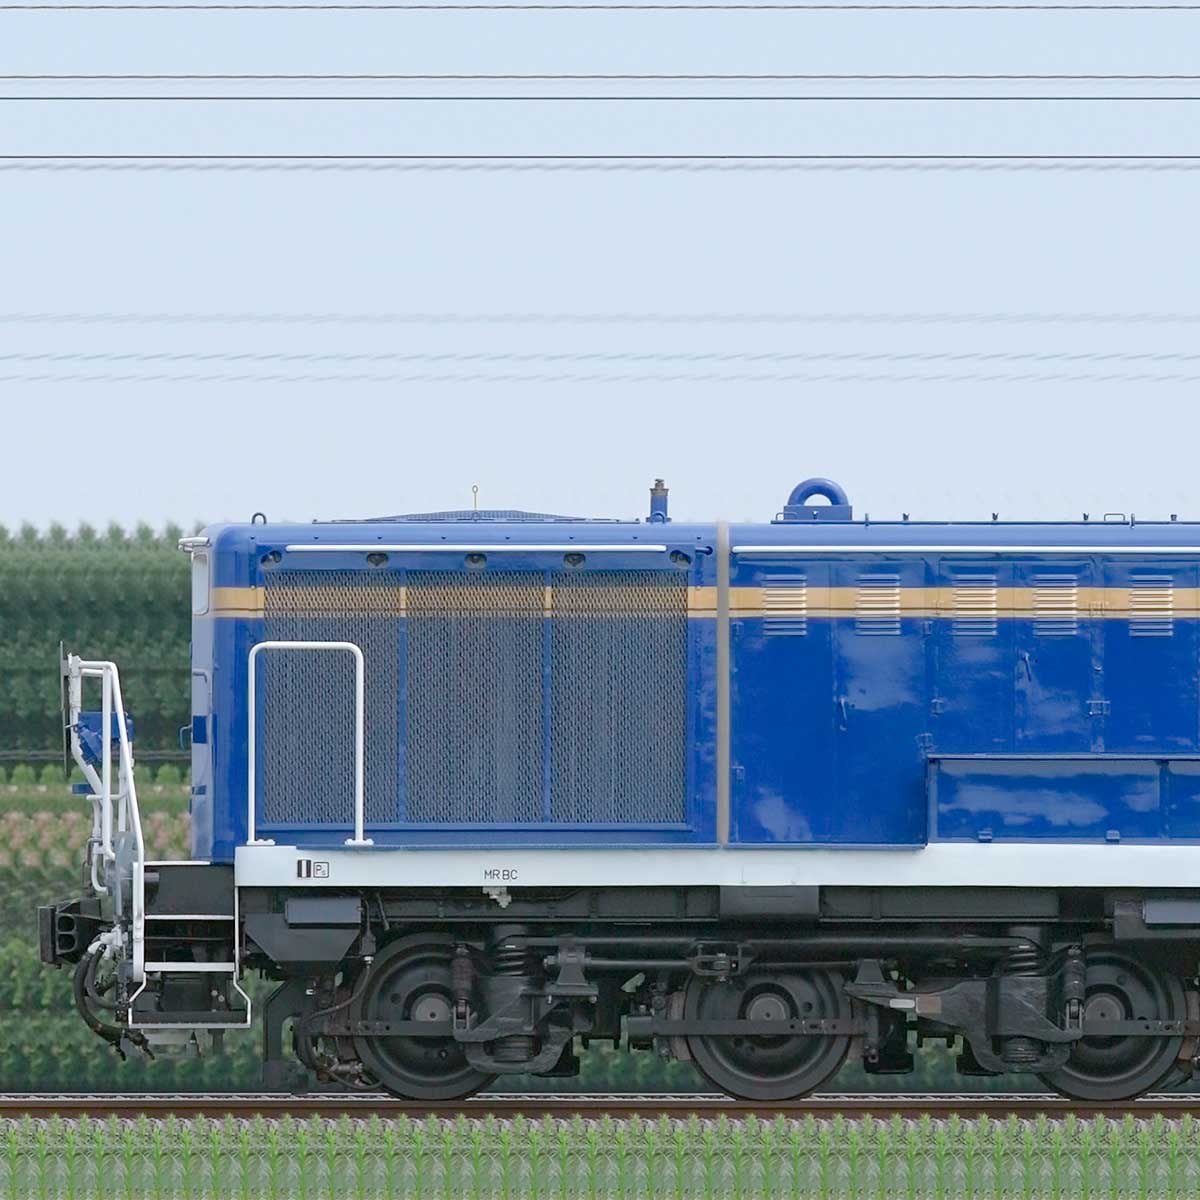 STARTRAIN #60110 ＲＥＮＦＥ（スペイン鉄道）３１９.２型ディーゼル機関車 　 ● 特価 ●